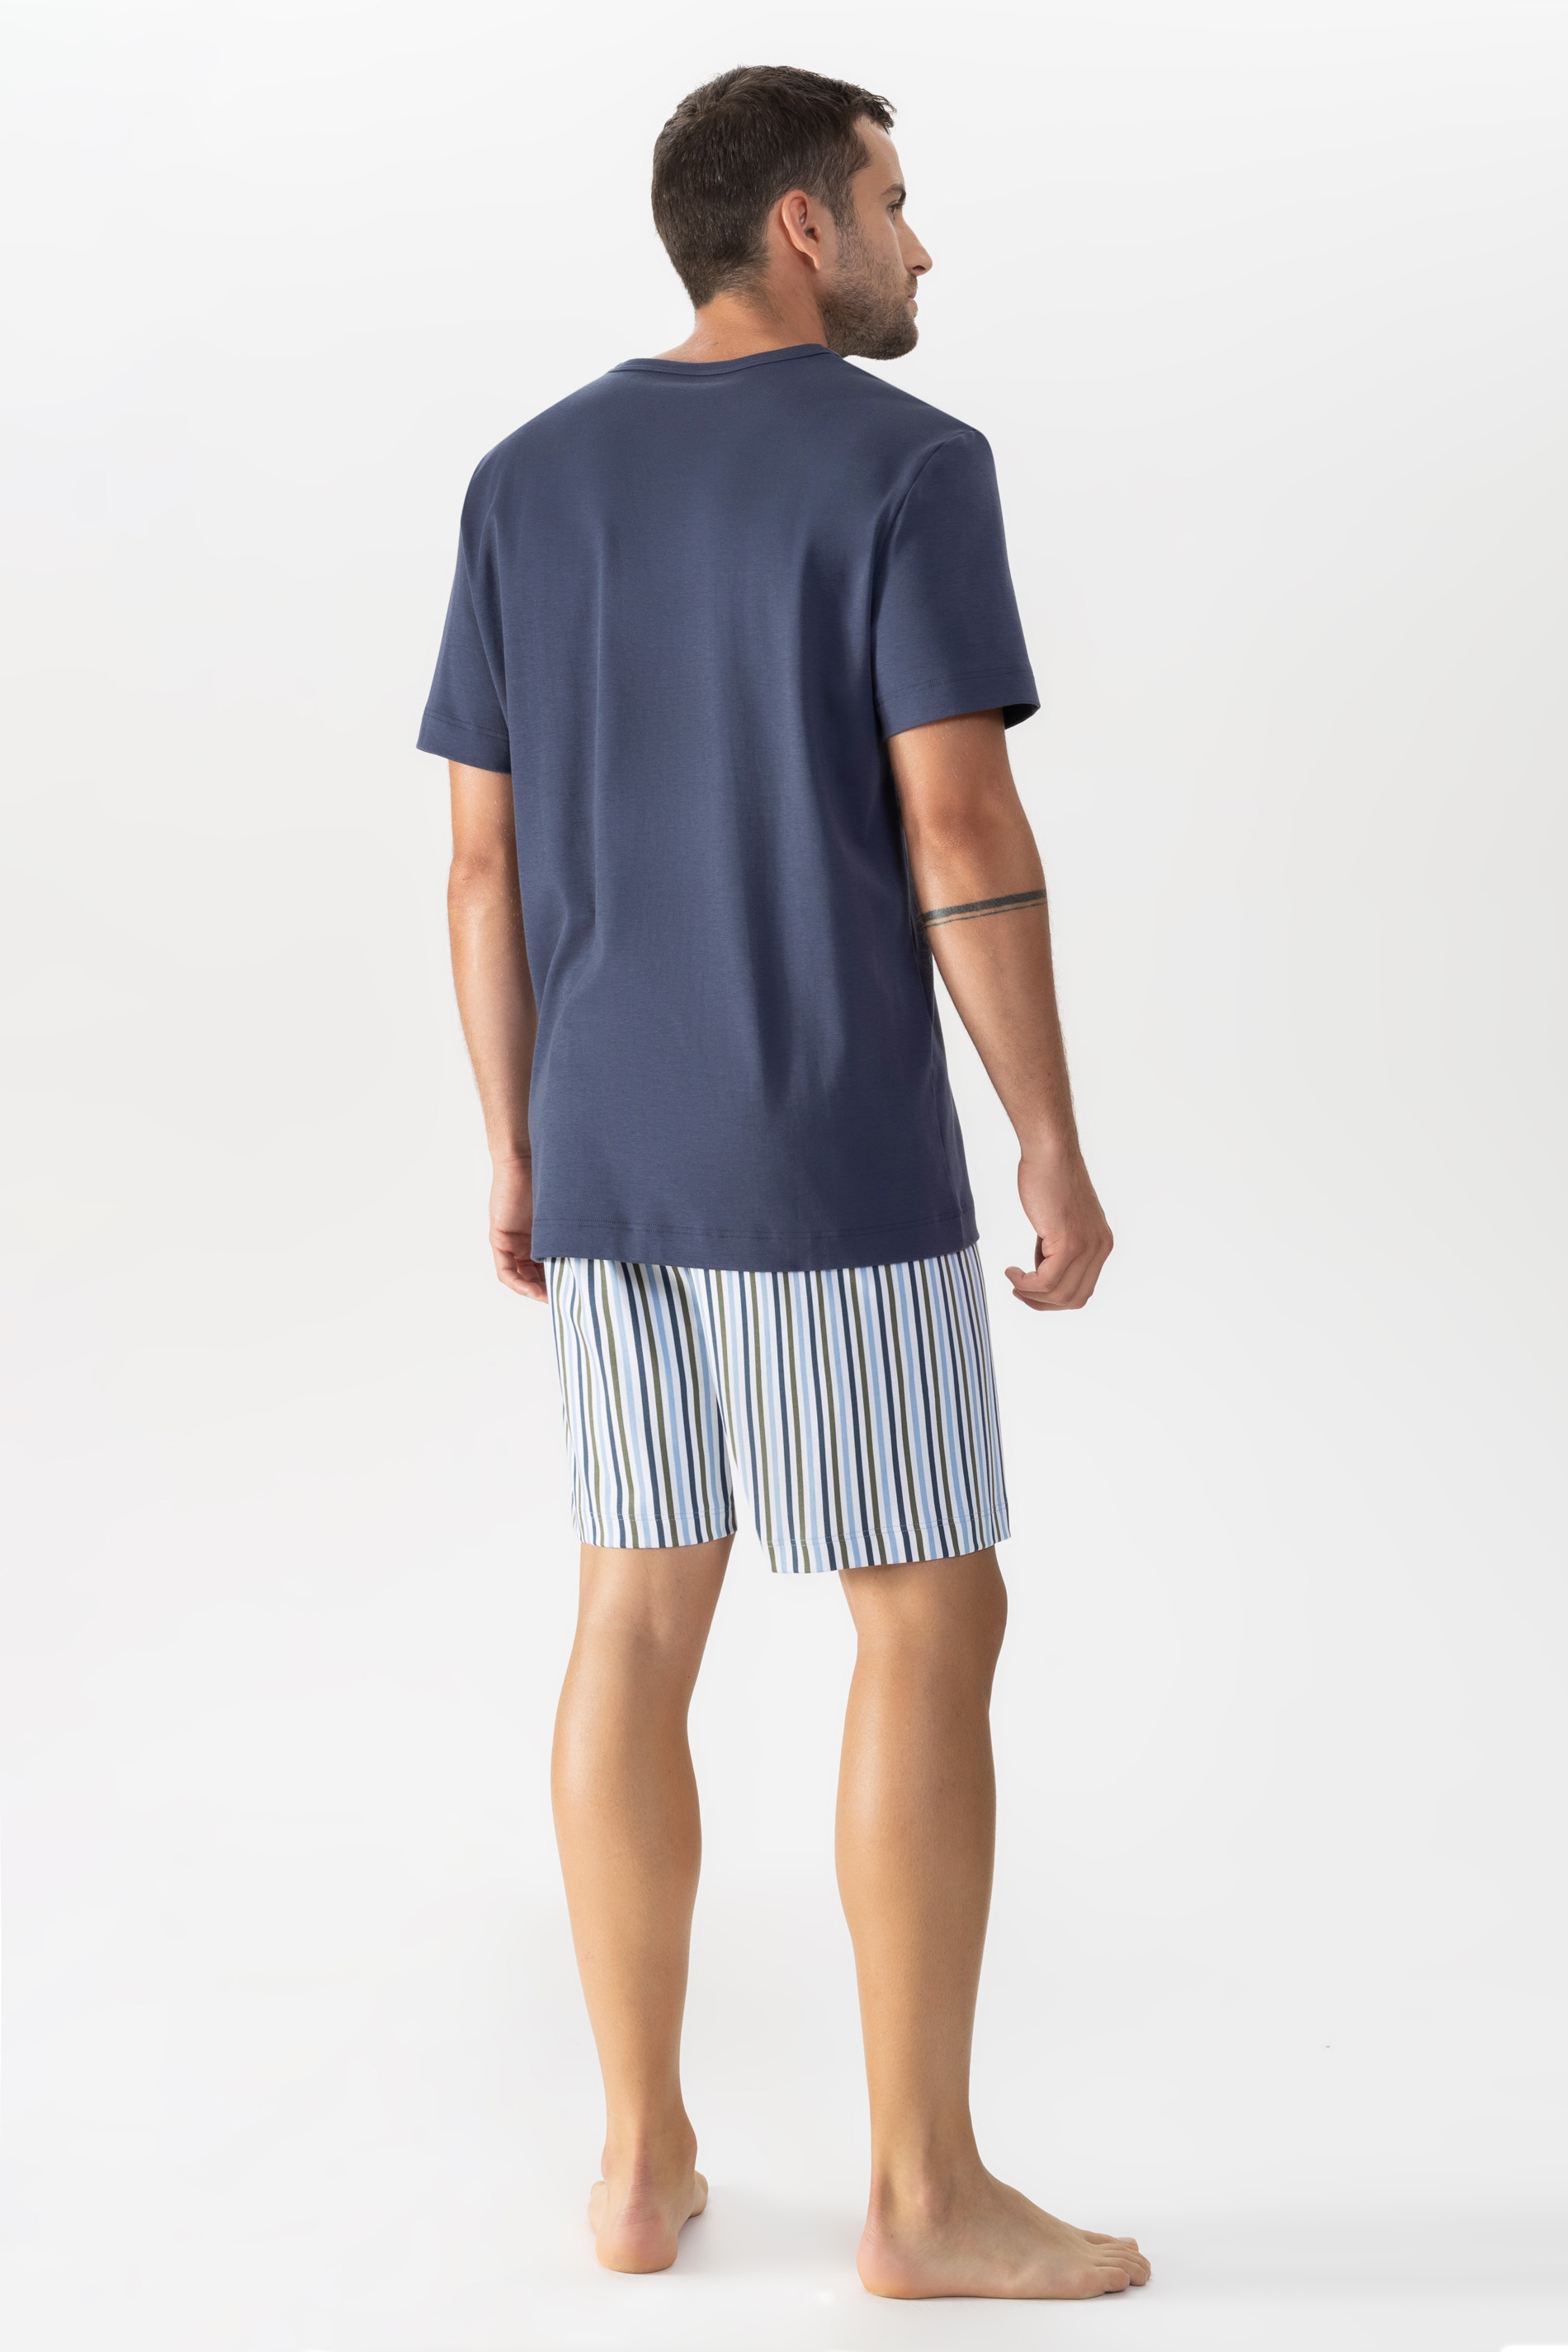 Pyjamas Serie Light Stripes Rear View | mey®